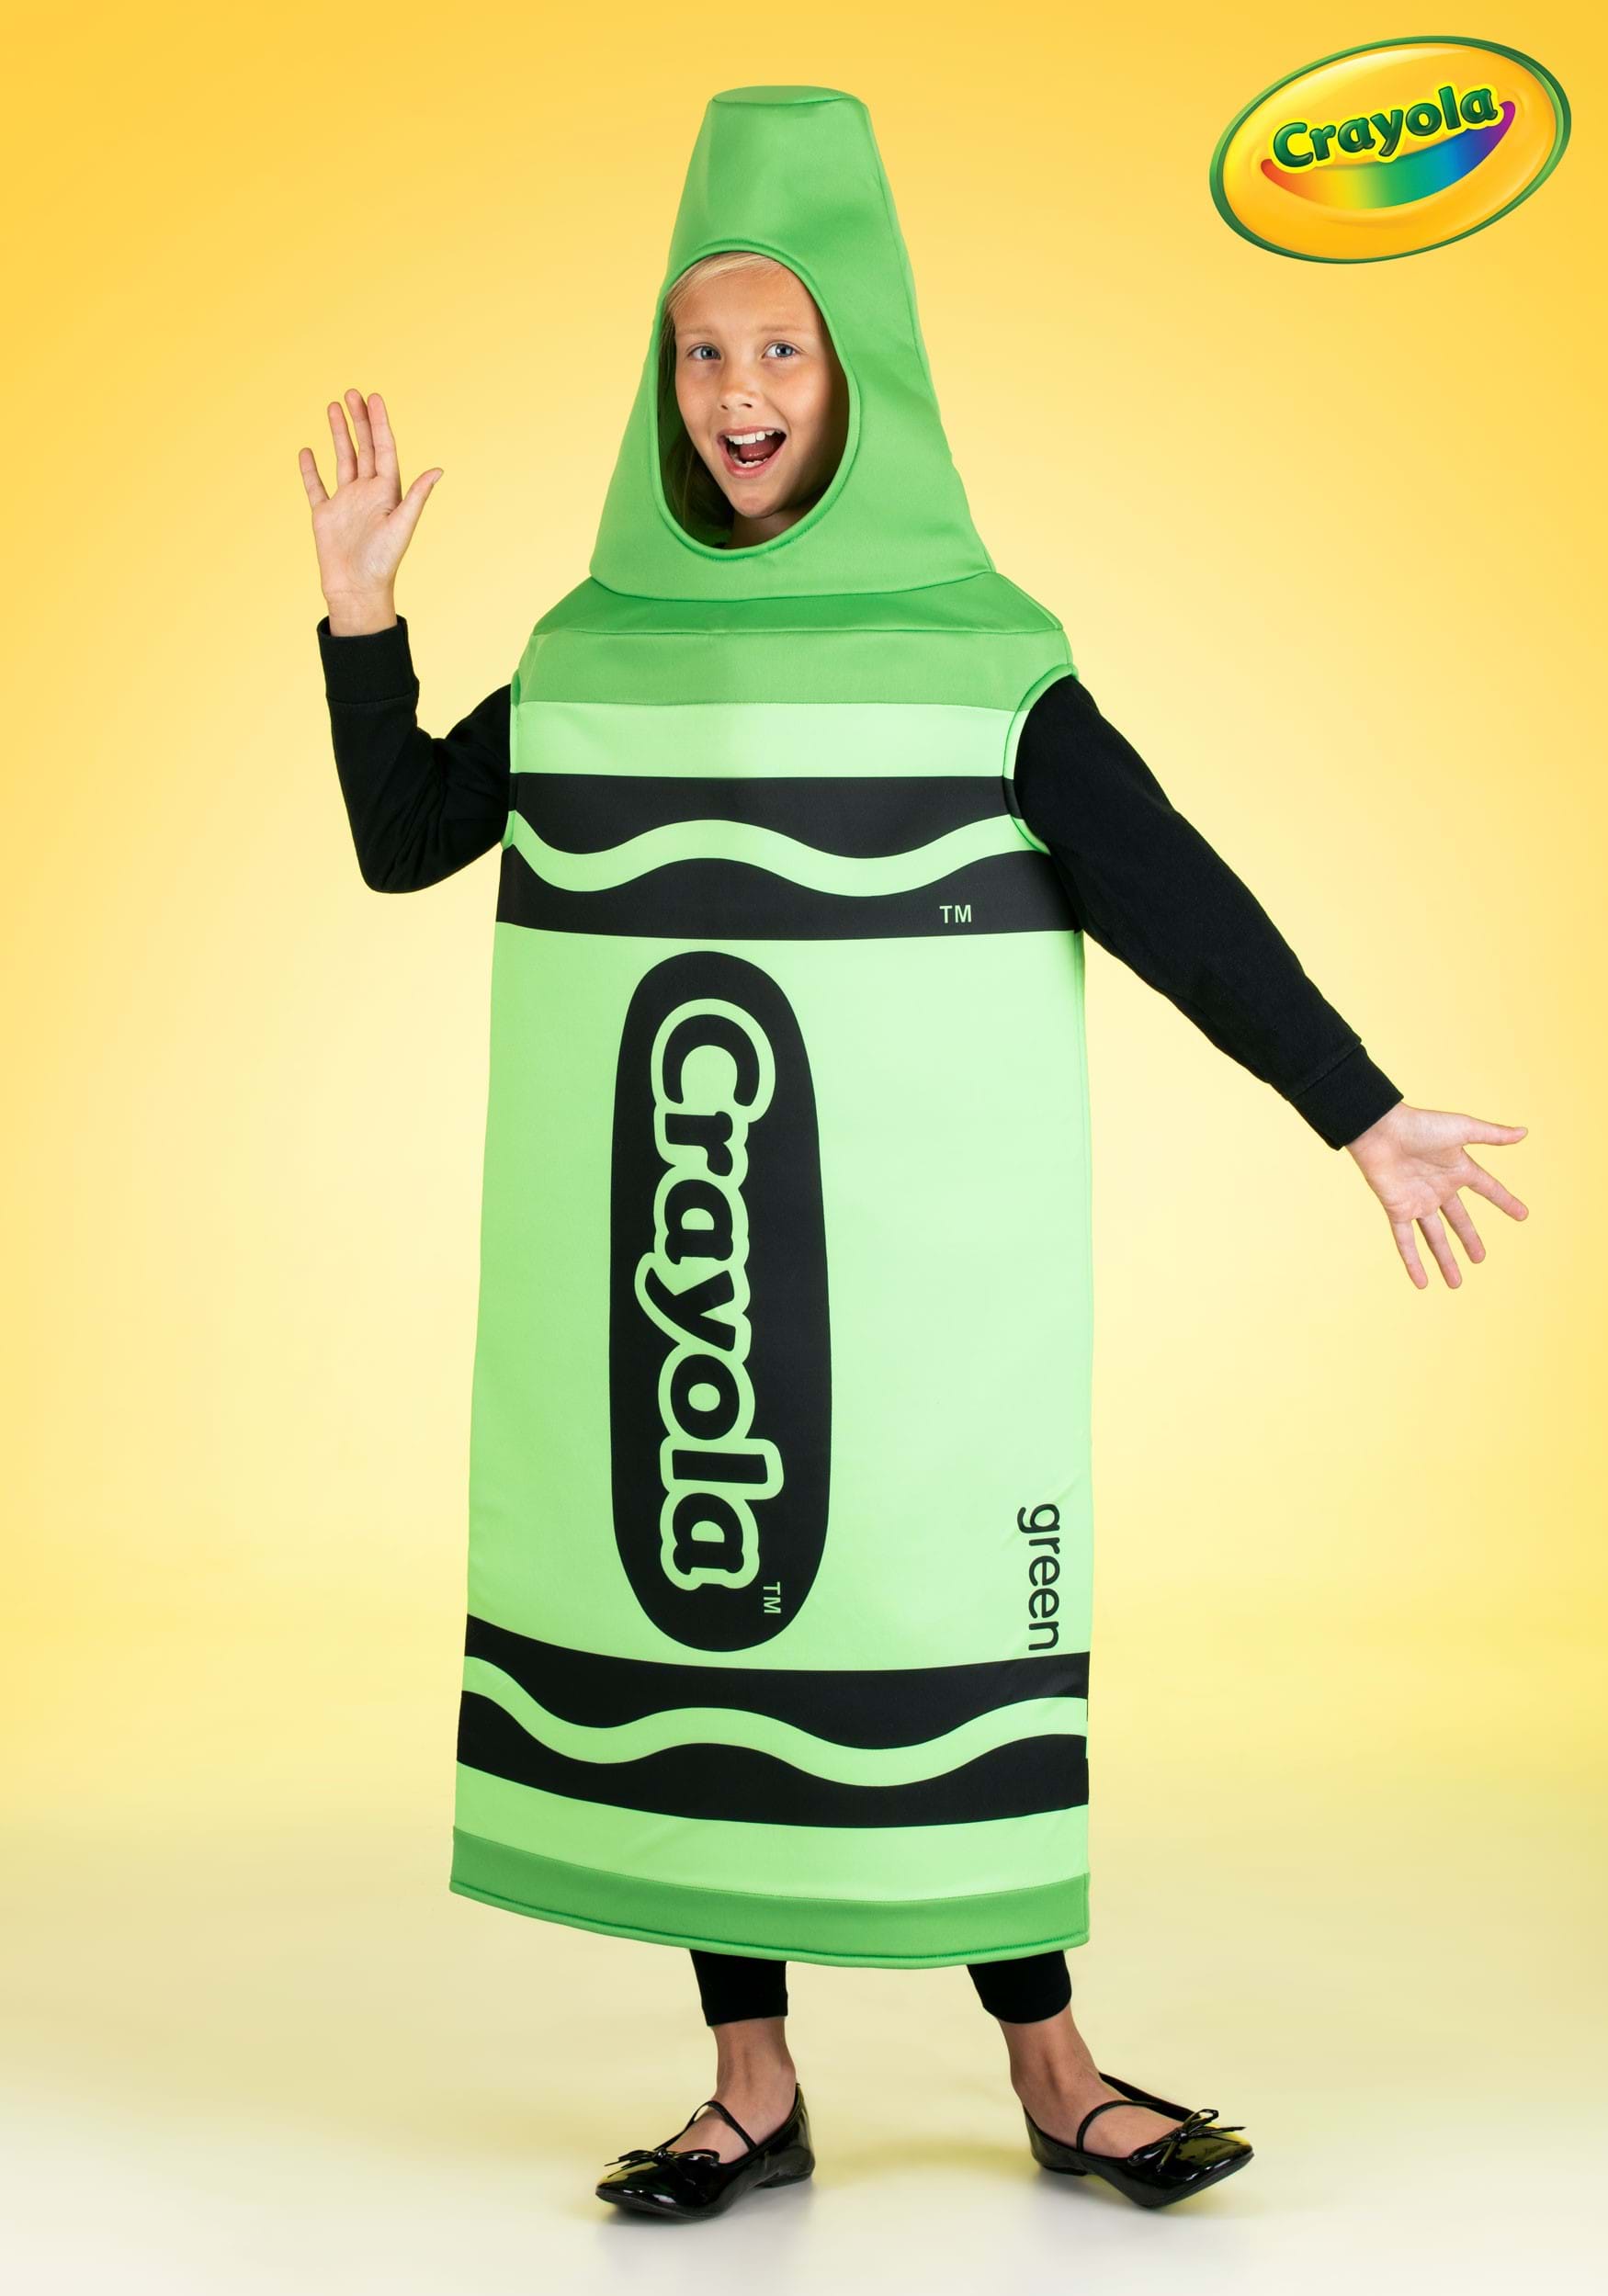 Green Crayola Crayon Costume for Kids